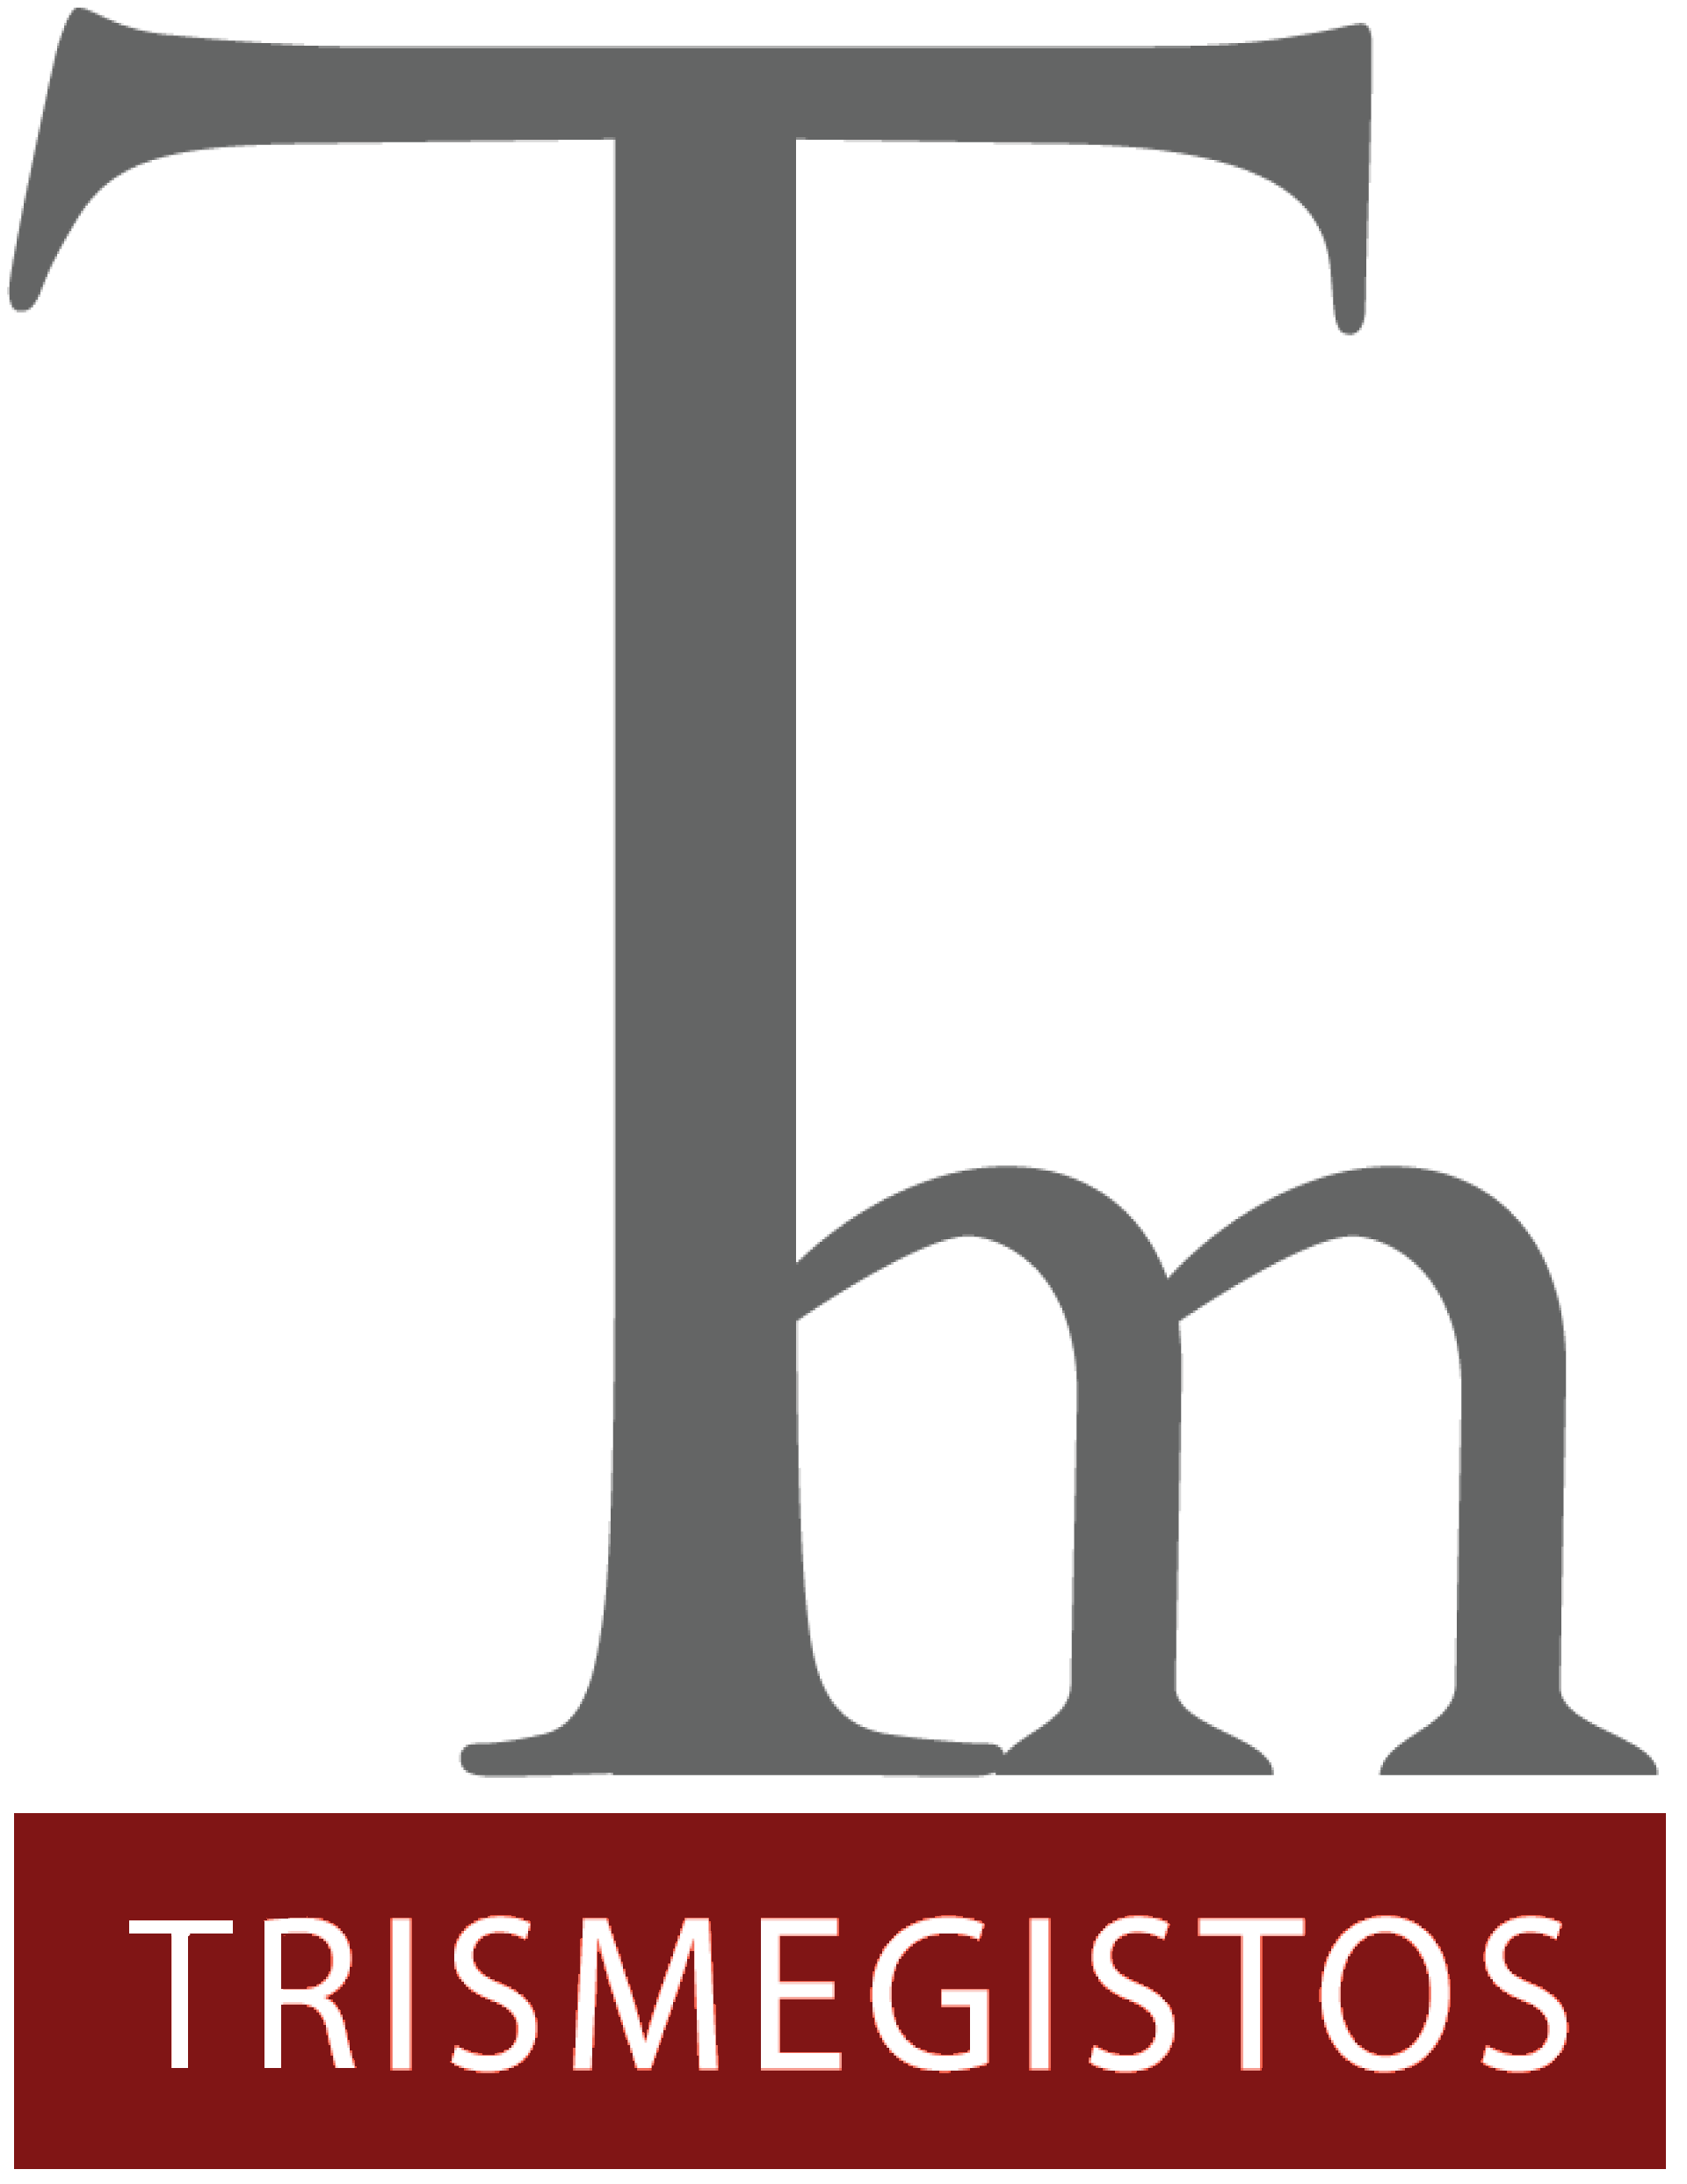 TM_logo